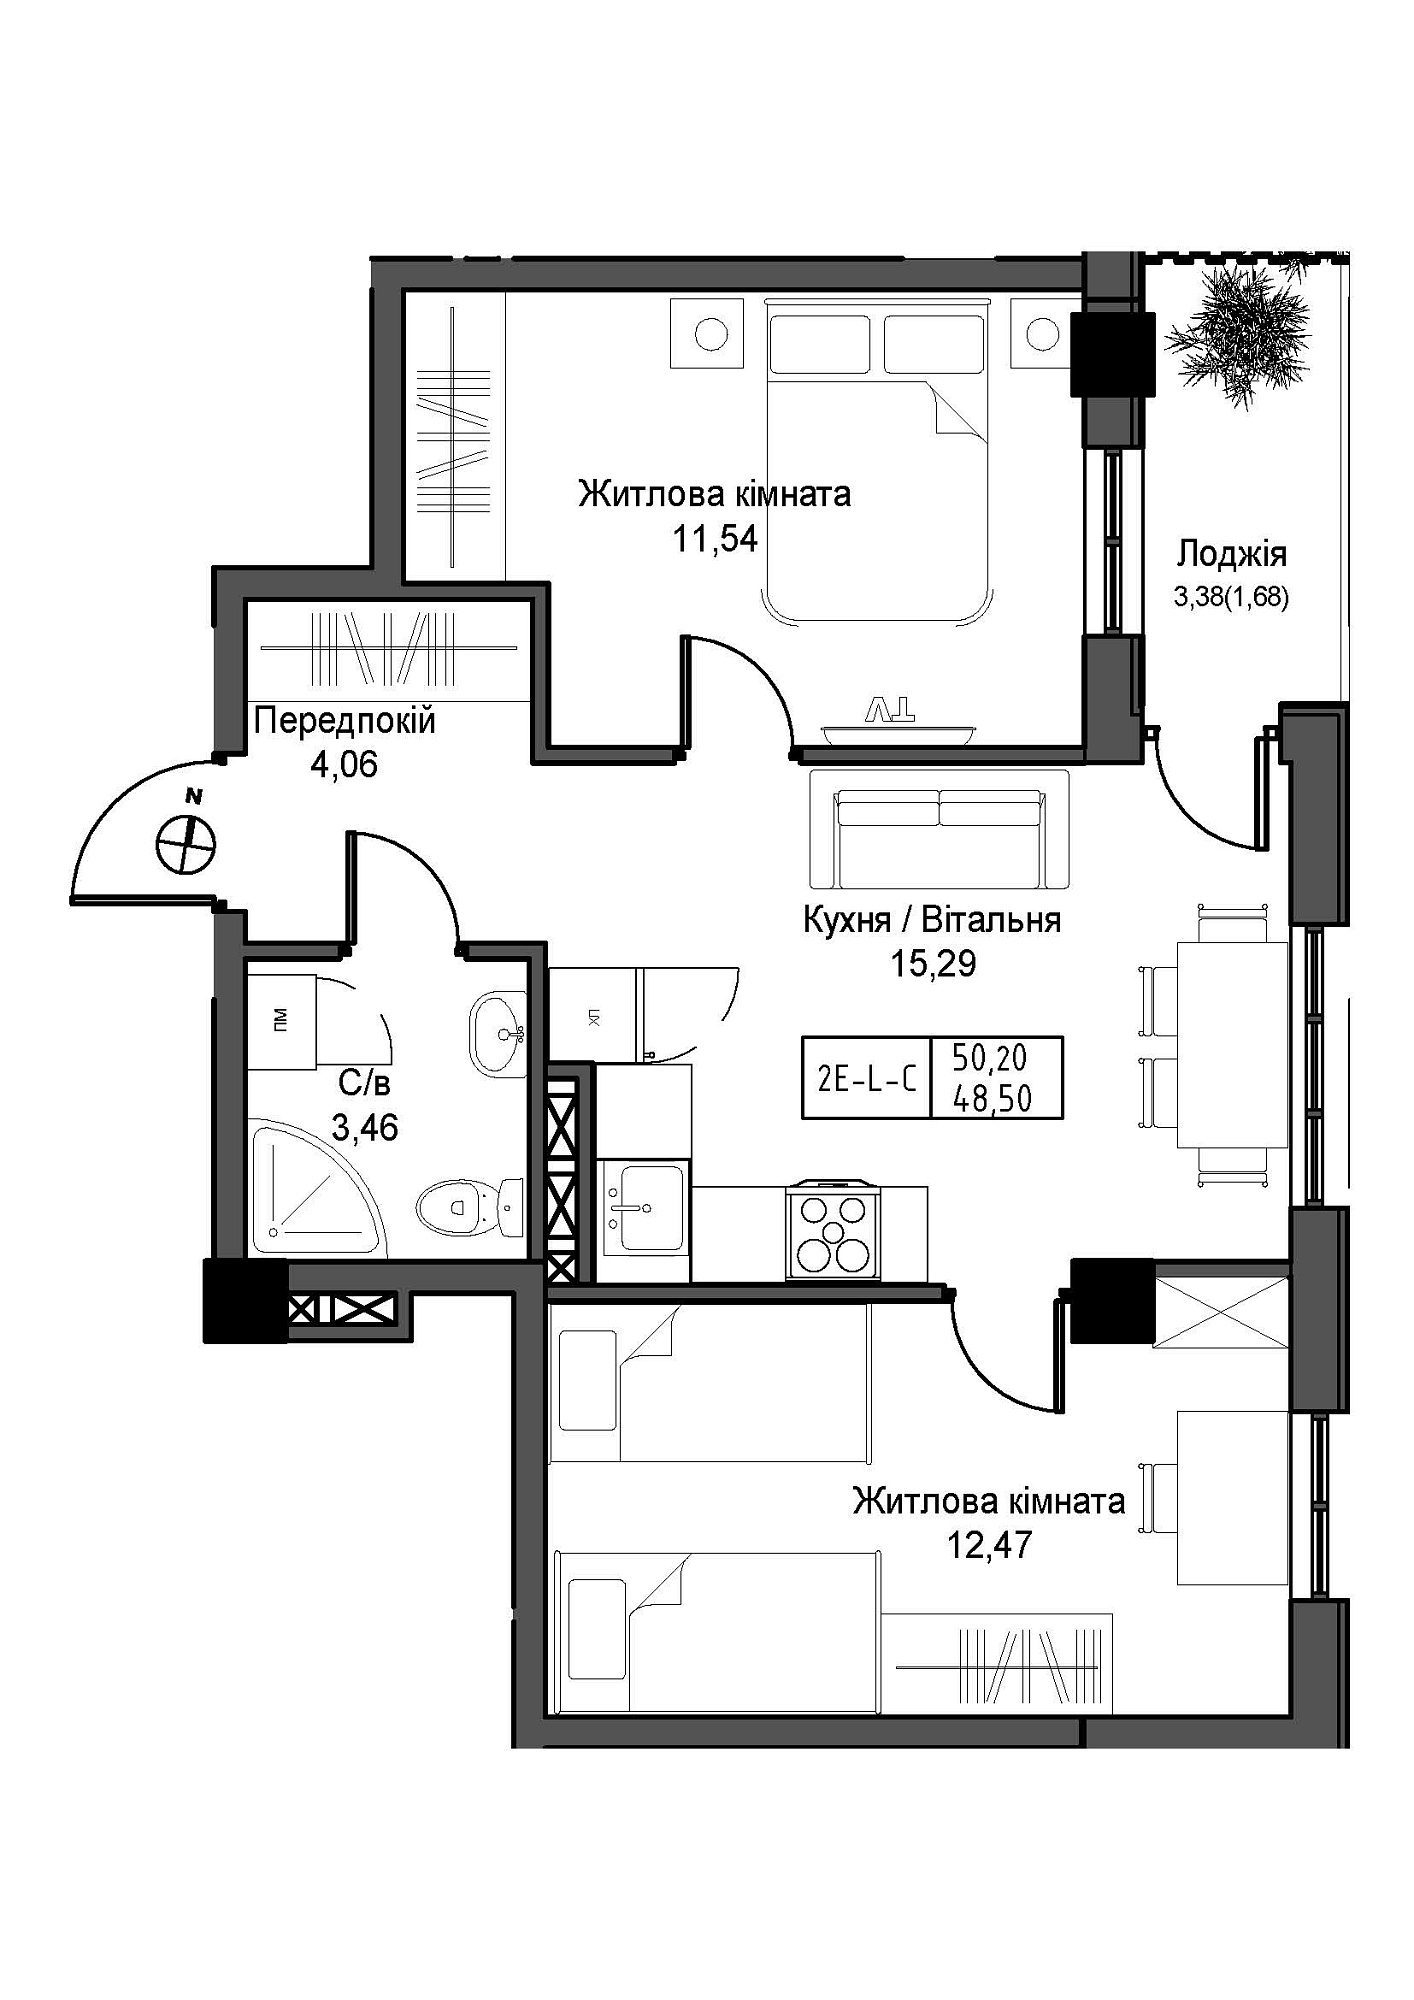 Планування 2-к квартира площею 48.5м2, UM-007-06/0007.